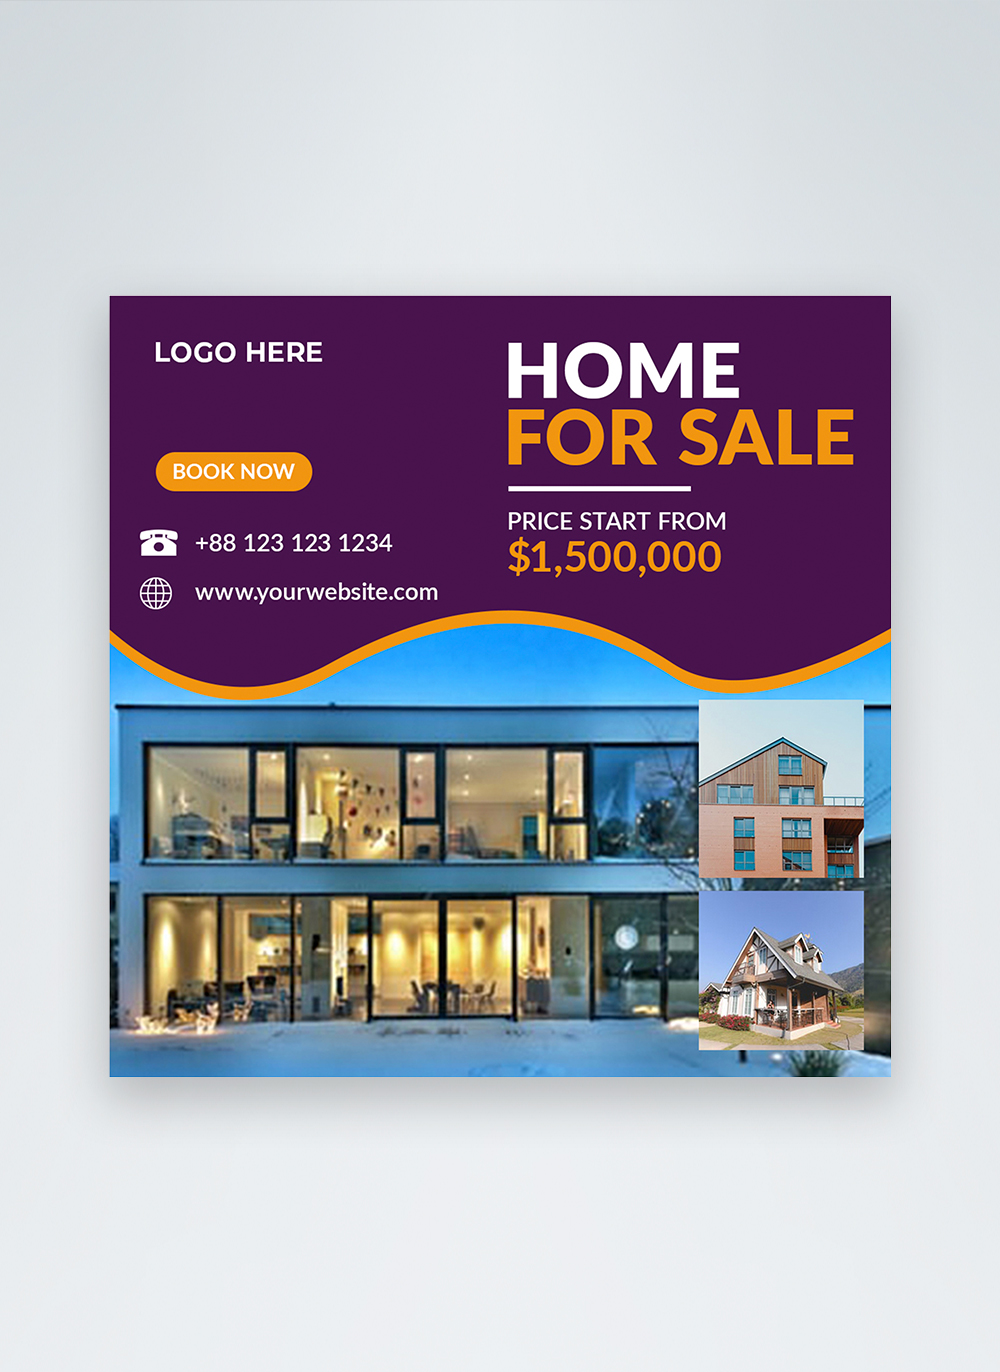 Real estate social media ads banner template image_picture free download 450002750_lovepik.com